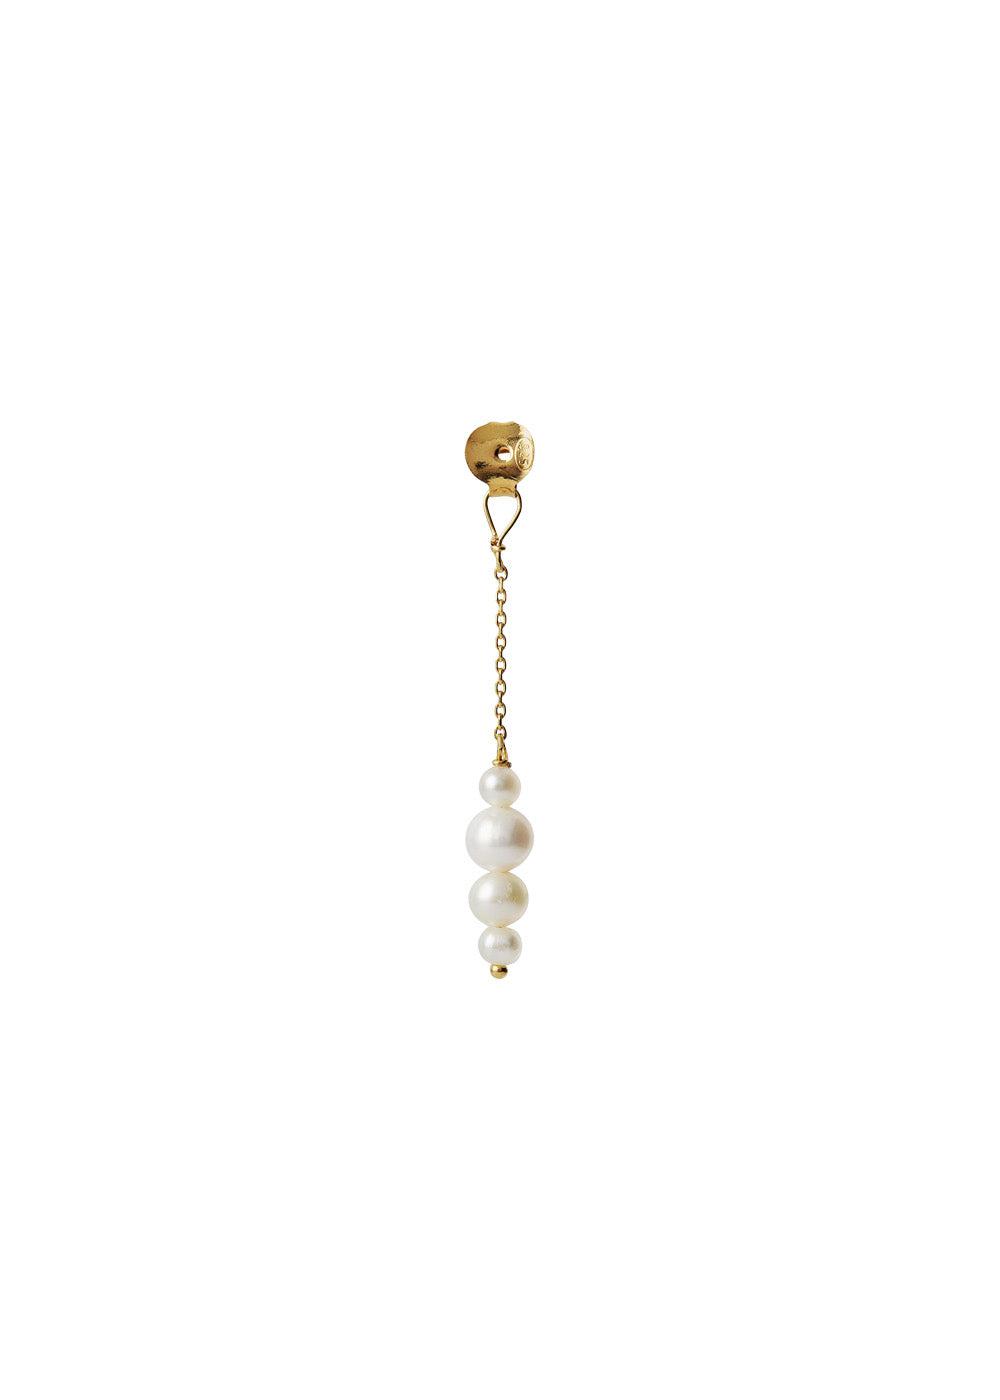 Stine A's Pearl Berries Behind Ear Earring - Gold. Køb øreringe her.